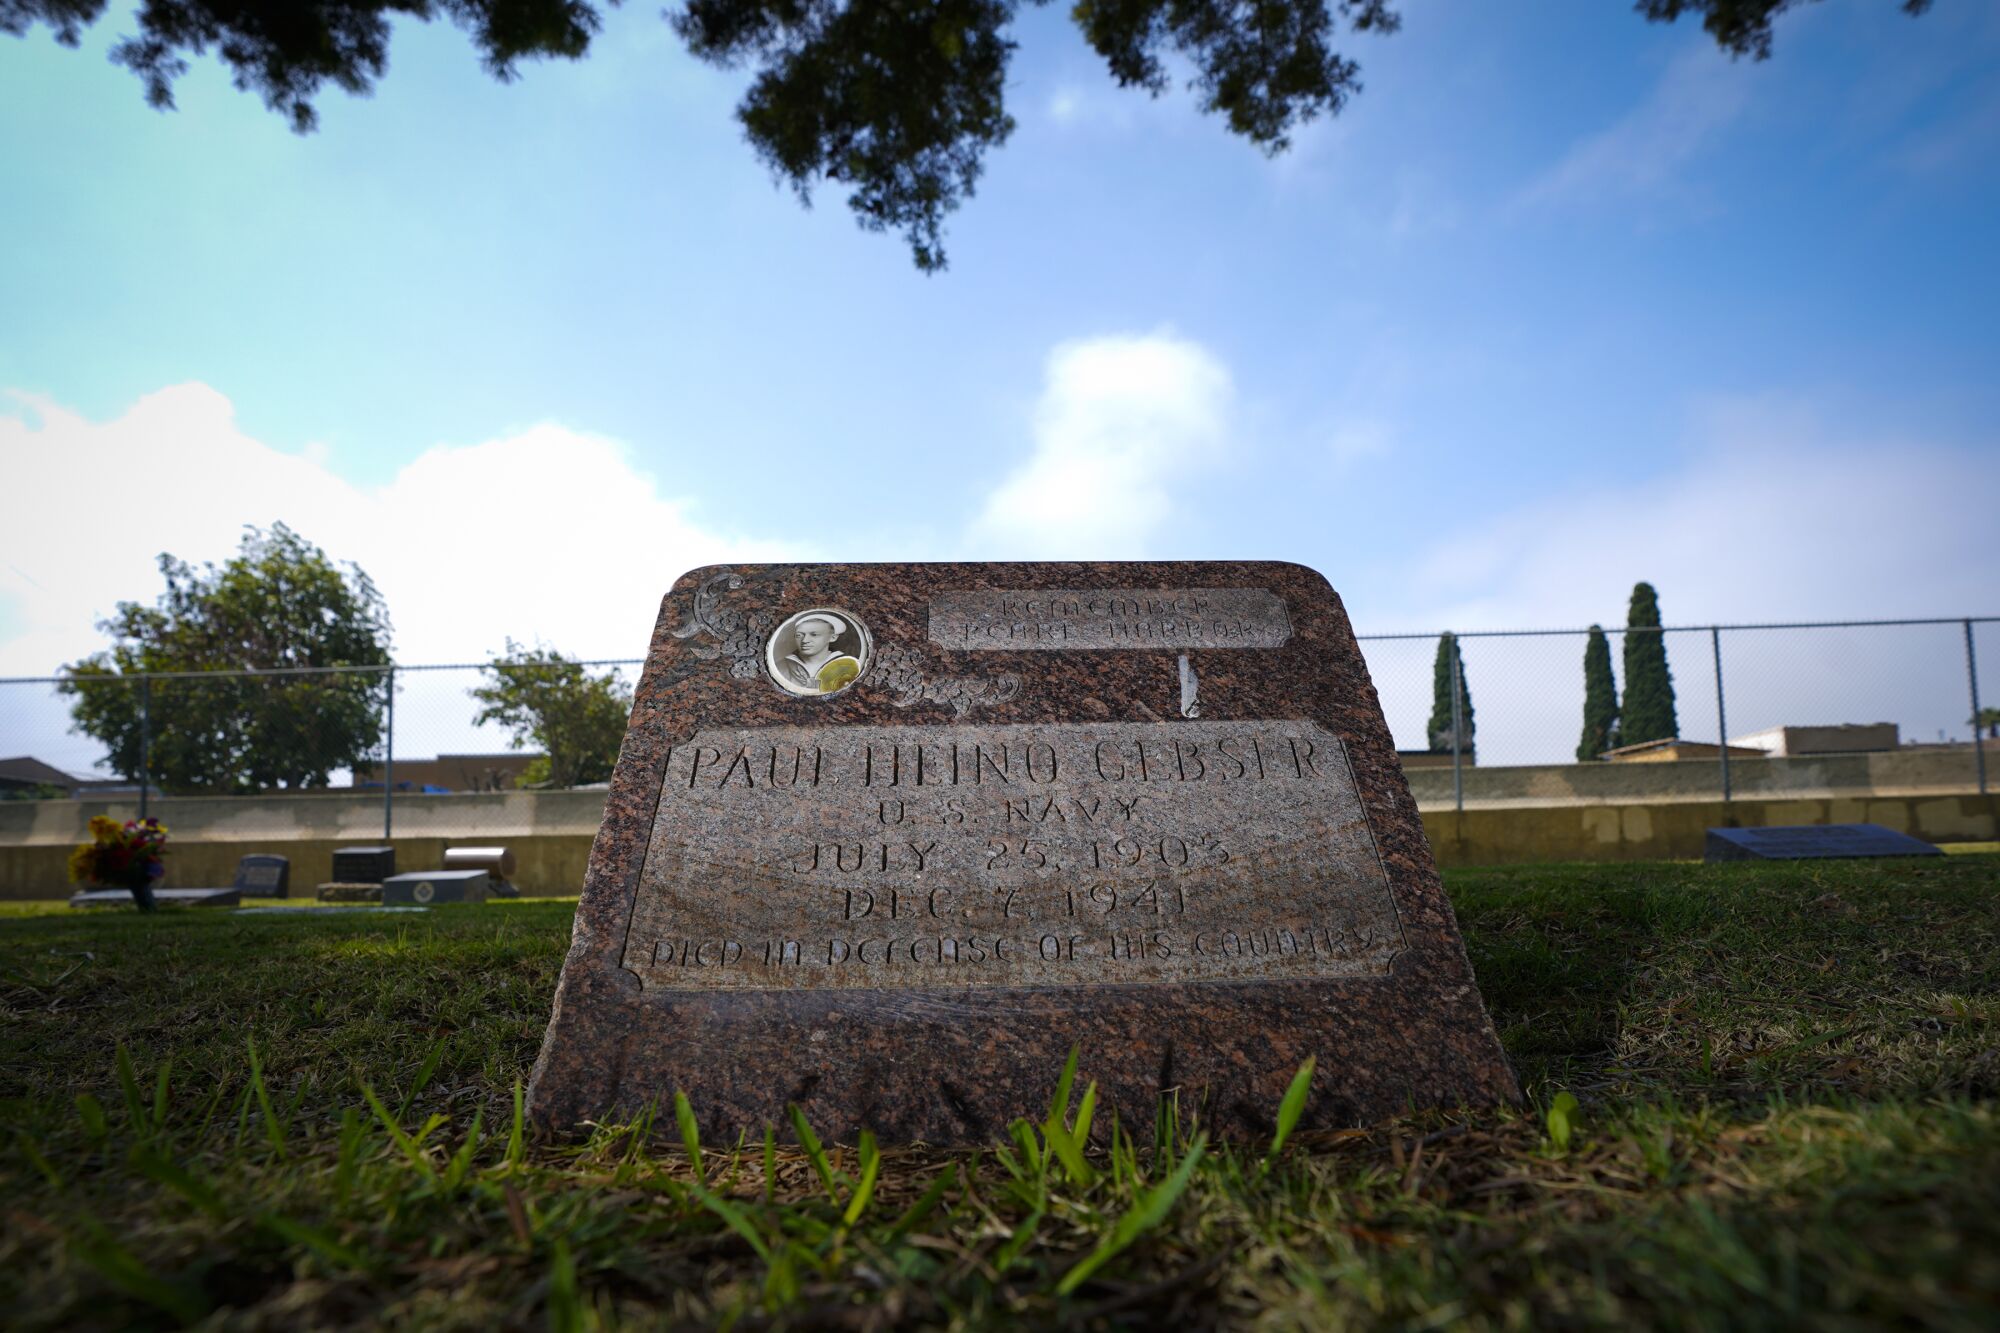 Paul Heino Gebser's gravestone features his photograph.